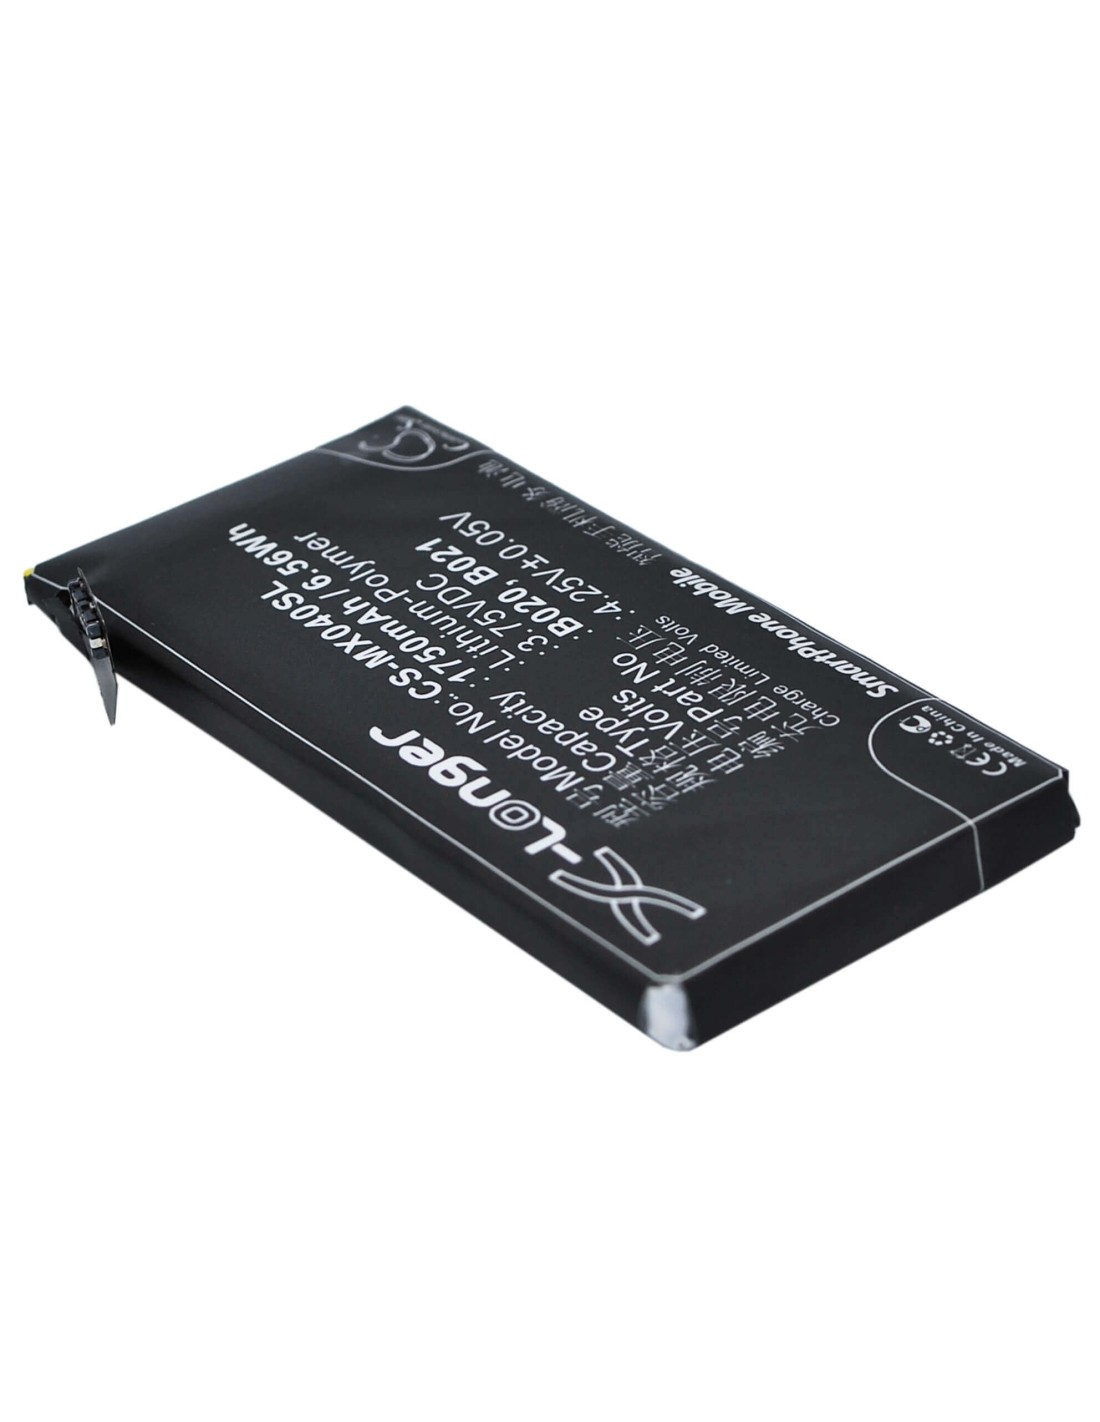 Battery for MeiZu MX2, M040, M045 3.75V, 1750mAh - 6.56Wh